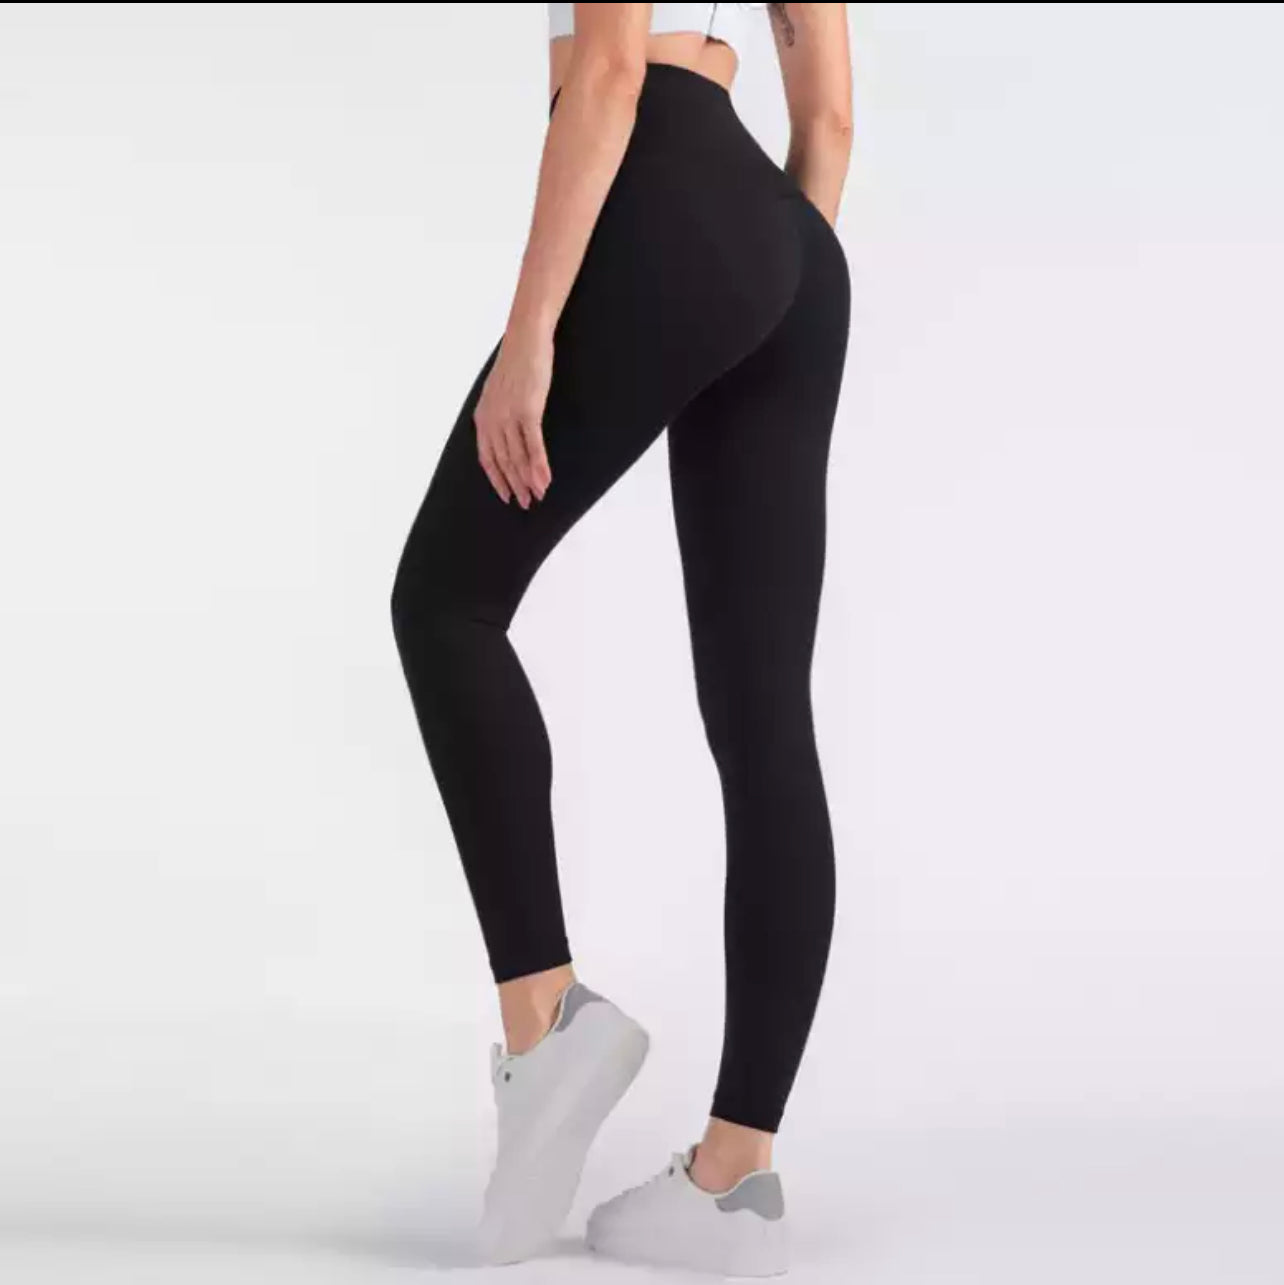 Adorna Shapewear Leggings is not just leggings, it combines the